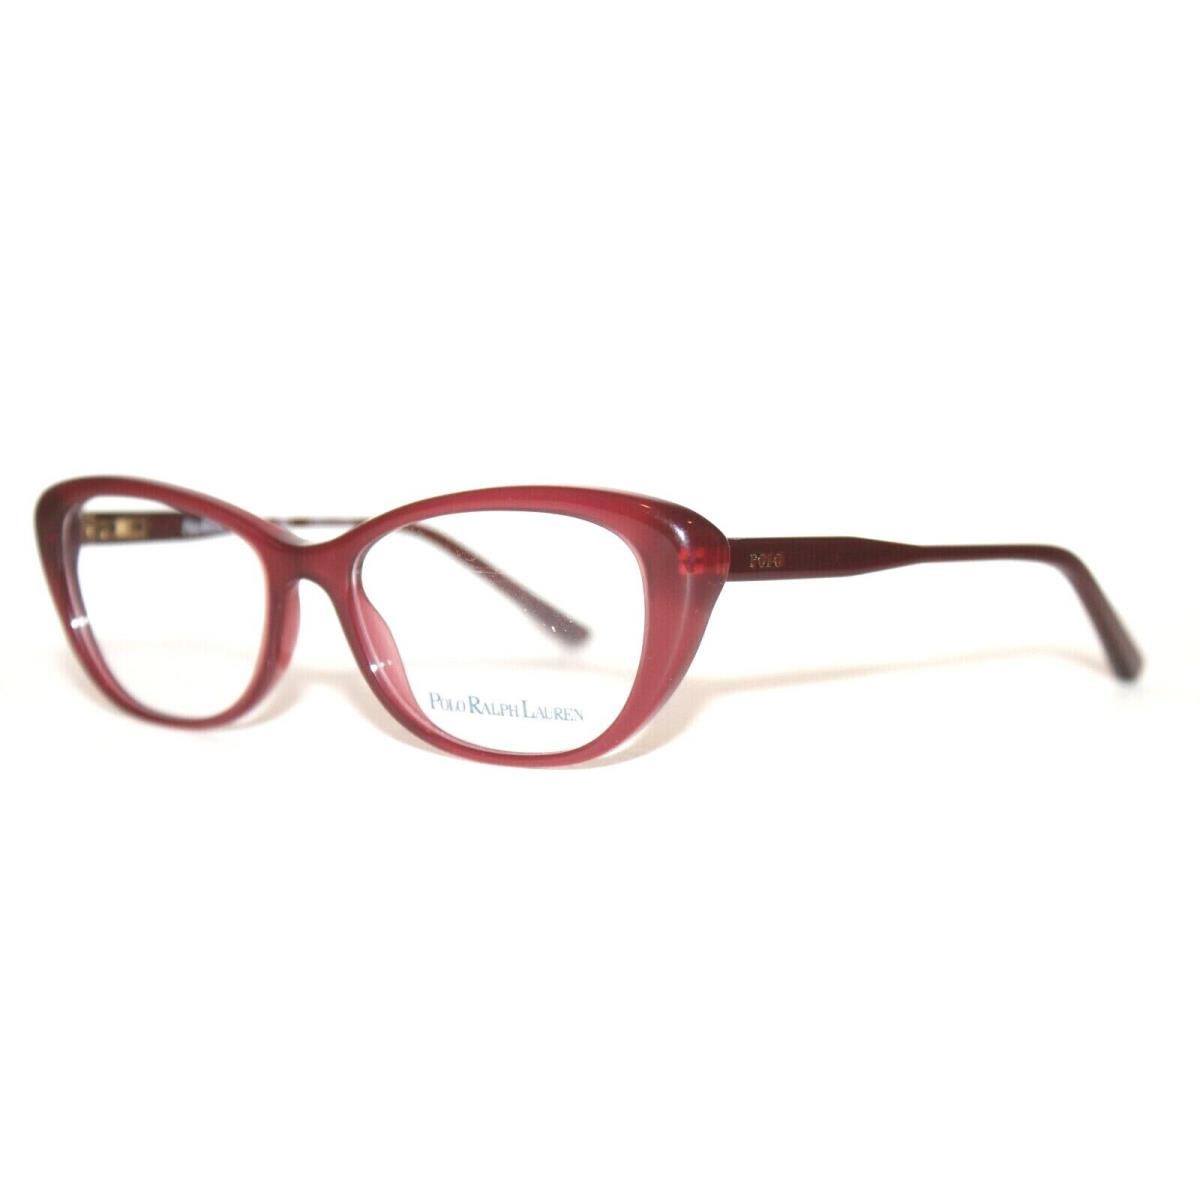 Polo Ralph Lauren PH85301667 Black Cherry Eyeglasses RX 48-15-130 - Clear Demo, Frame: Burgundy